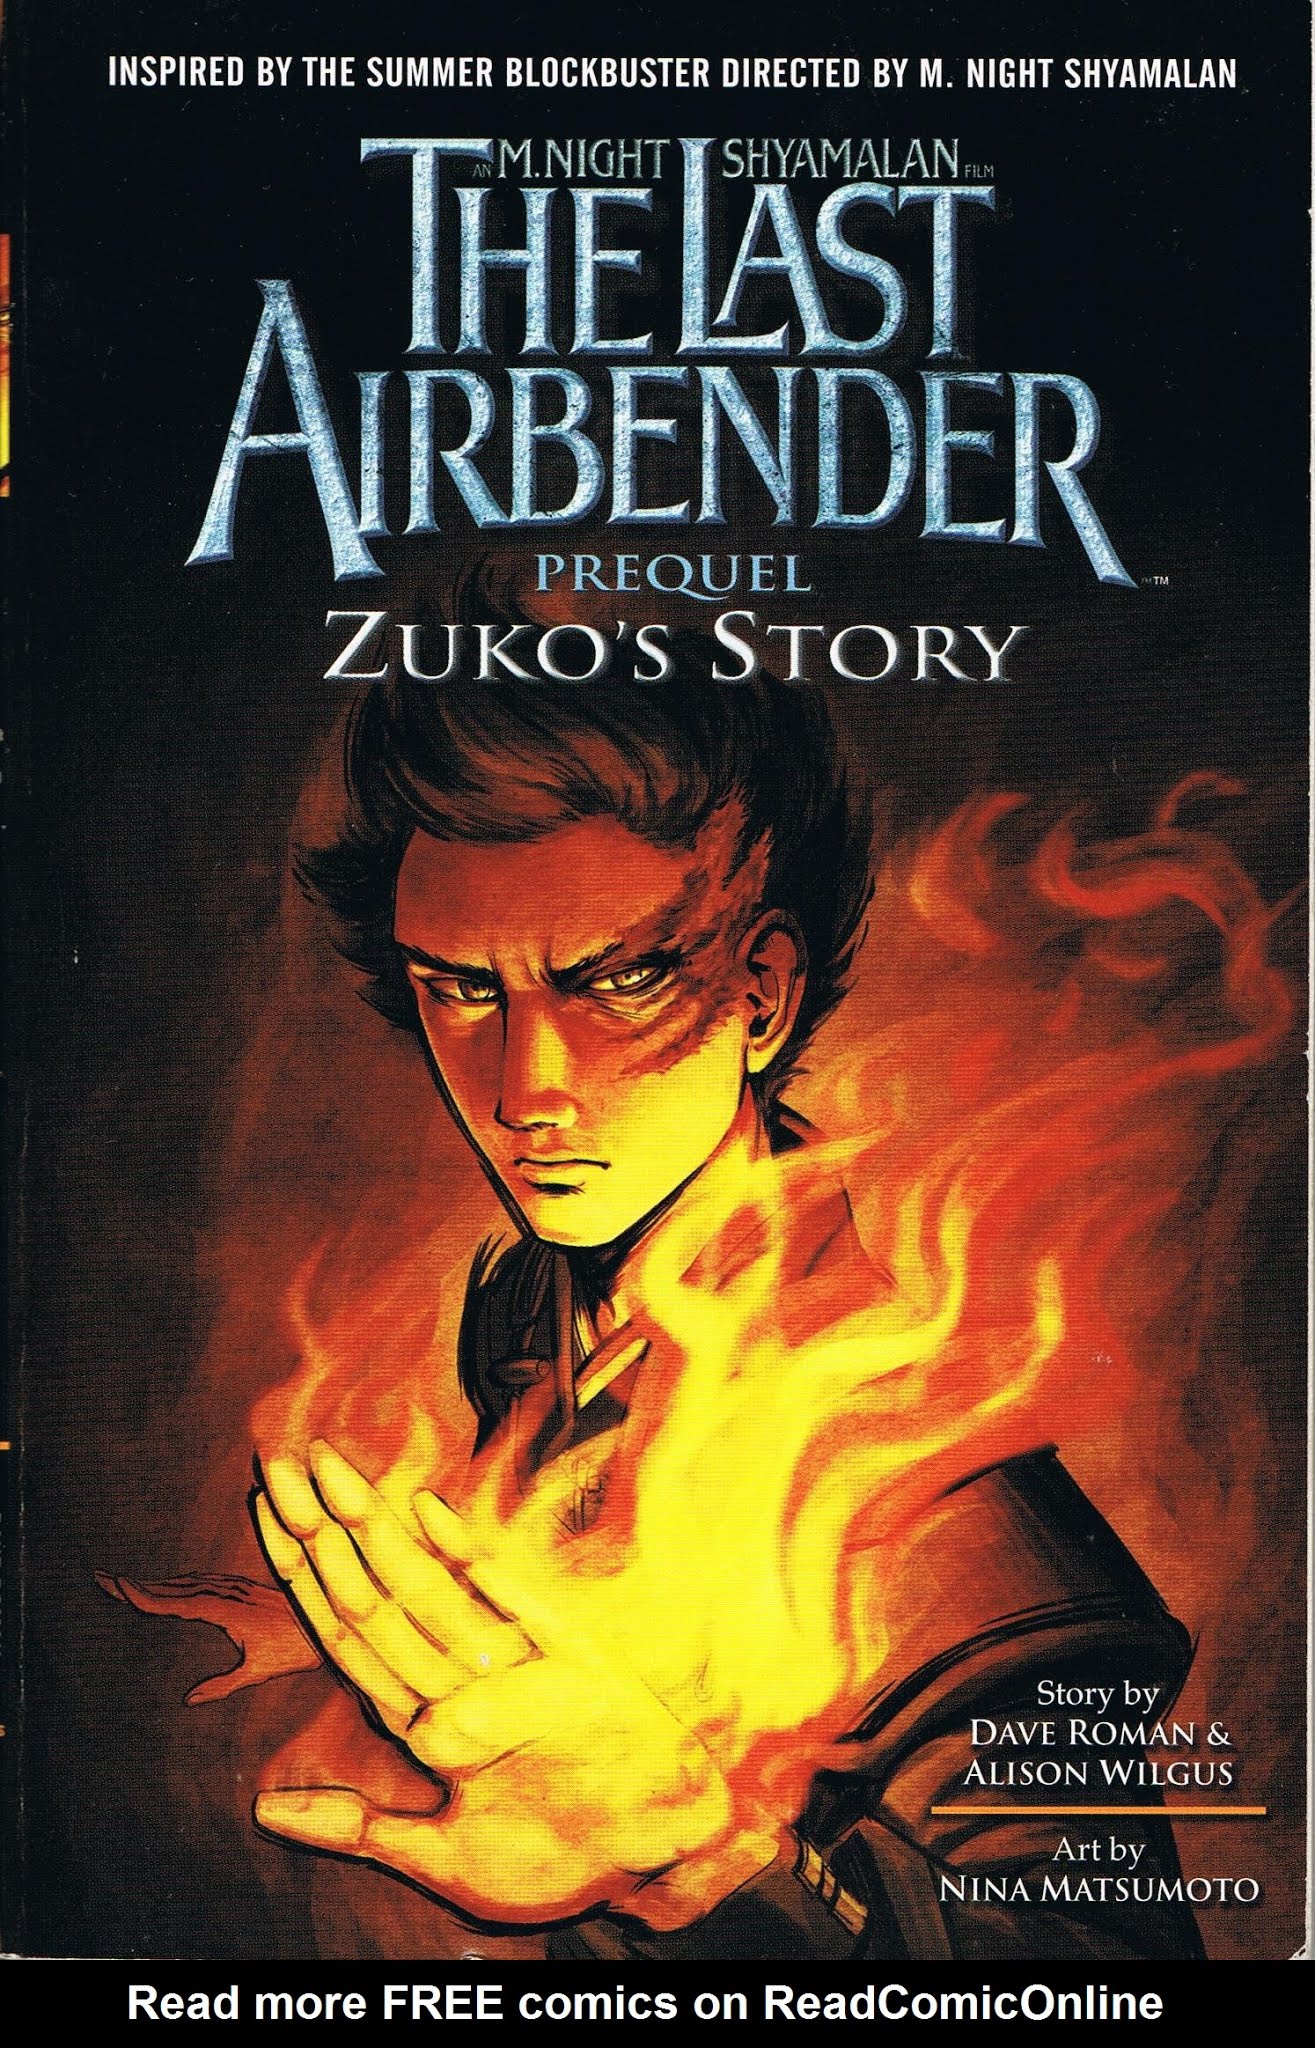 The last airbender zuko's story